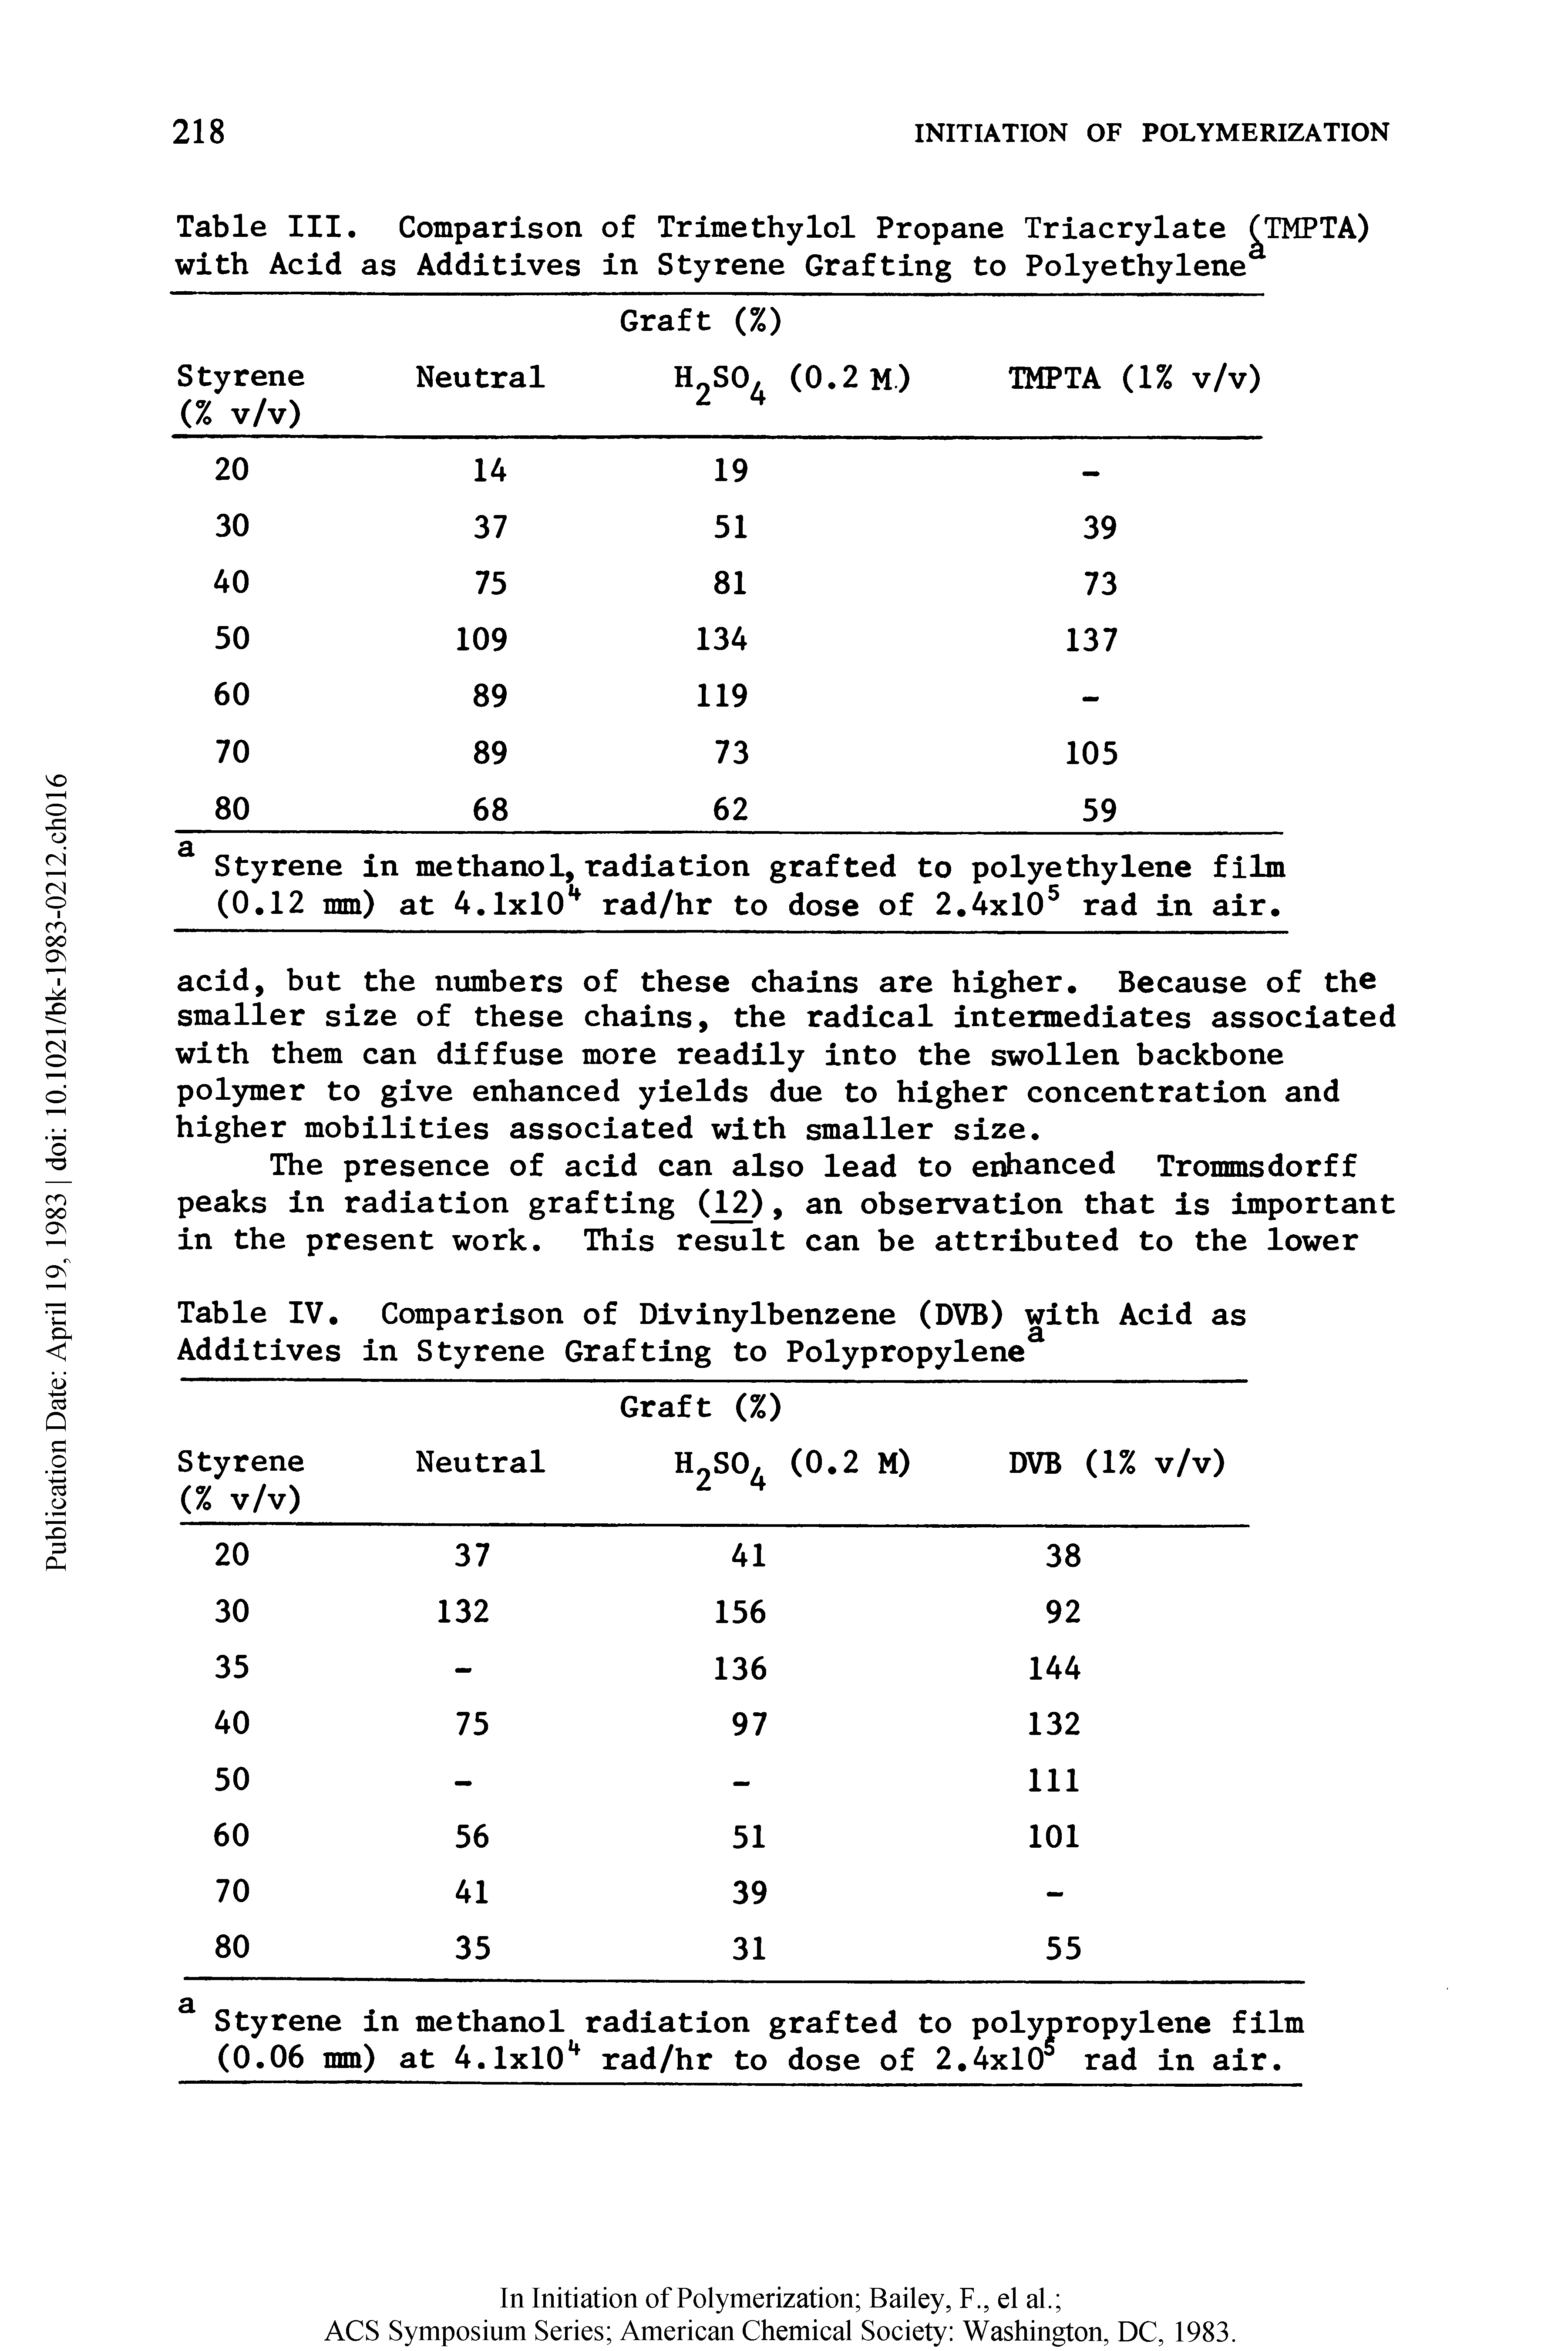 Table III with Acid. Comparison of Trimethylol Propane Triacrylate (TMPTA) as Additives in Styrene Grafting to Polyethylene ...